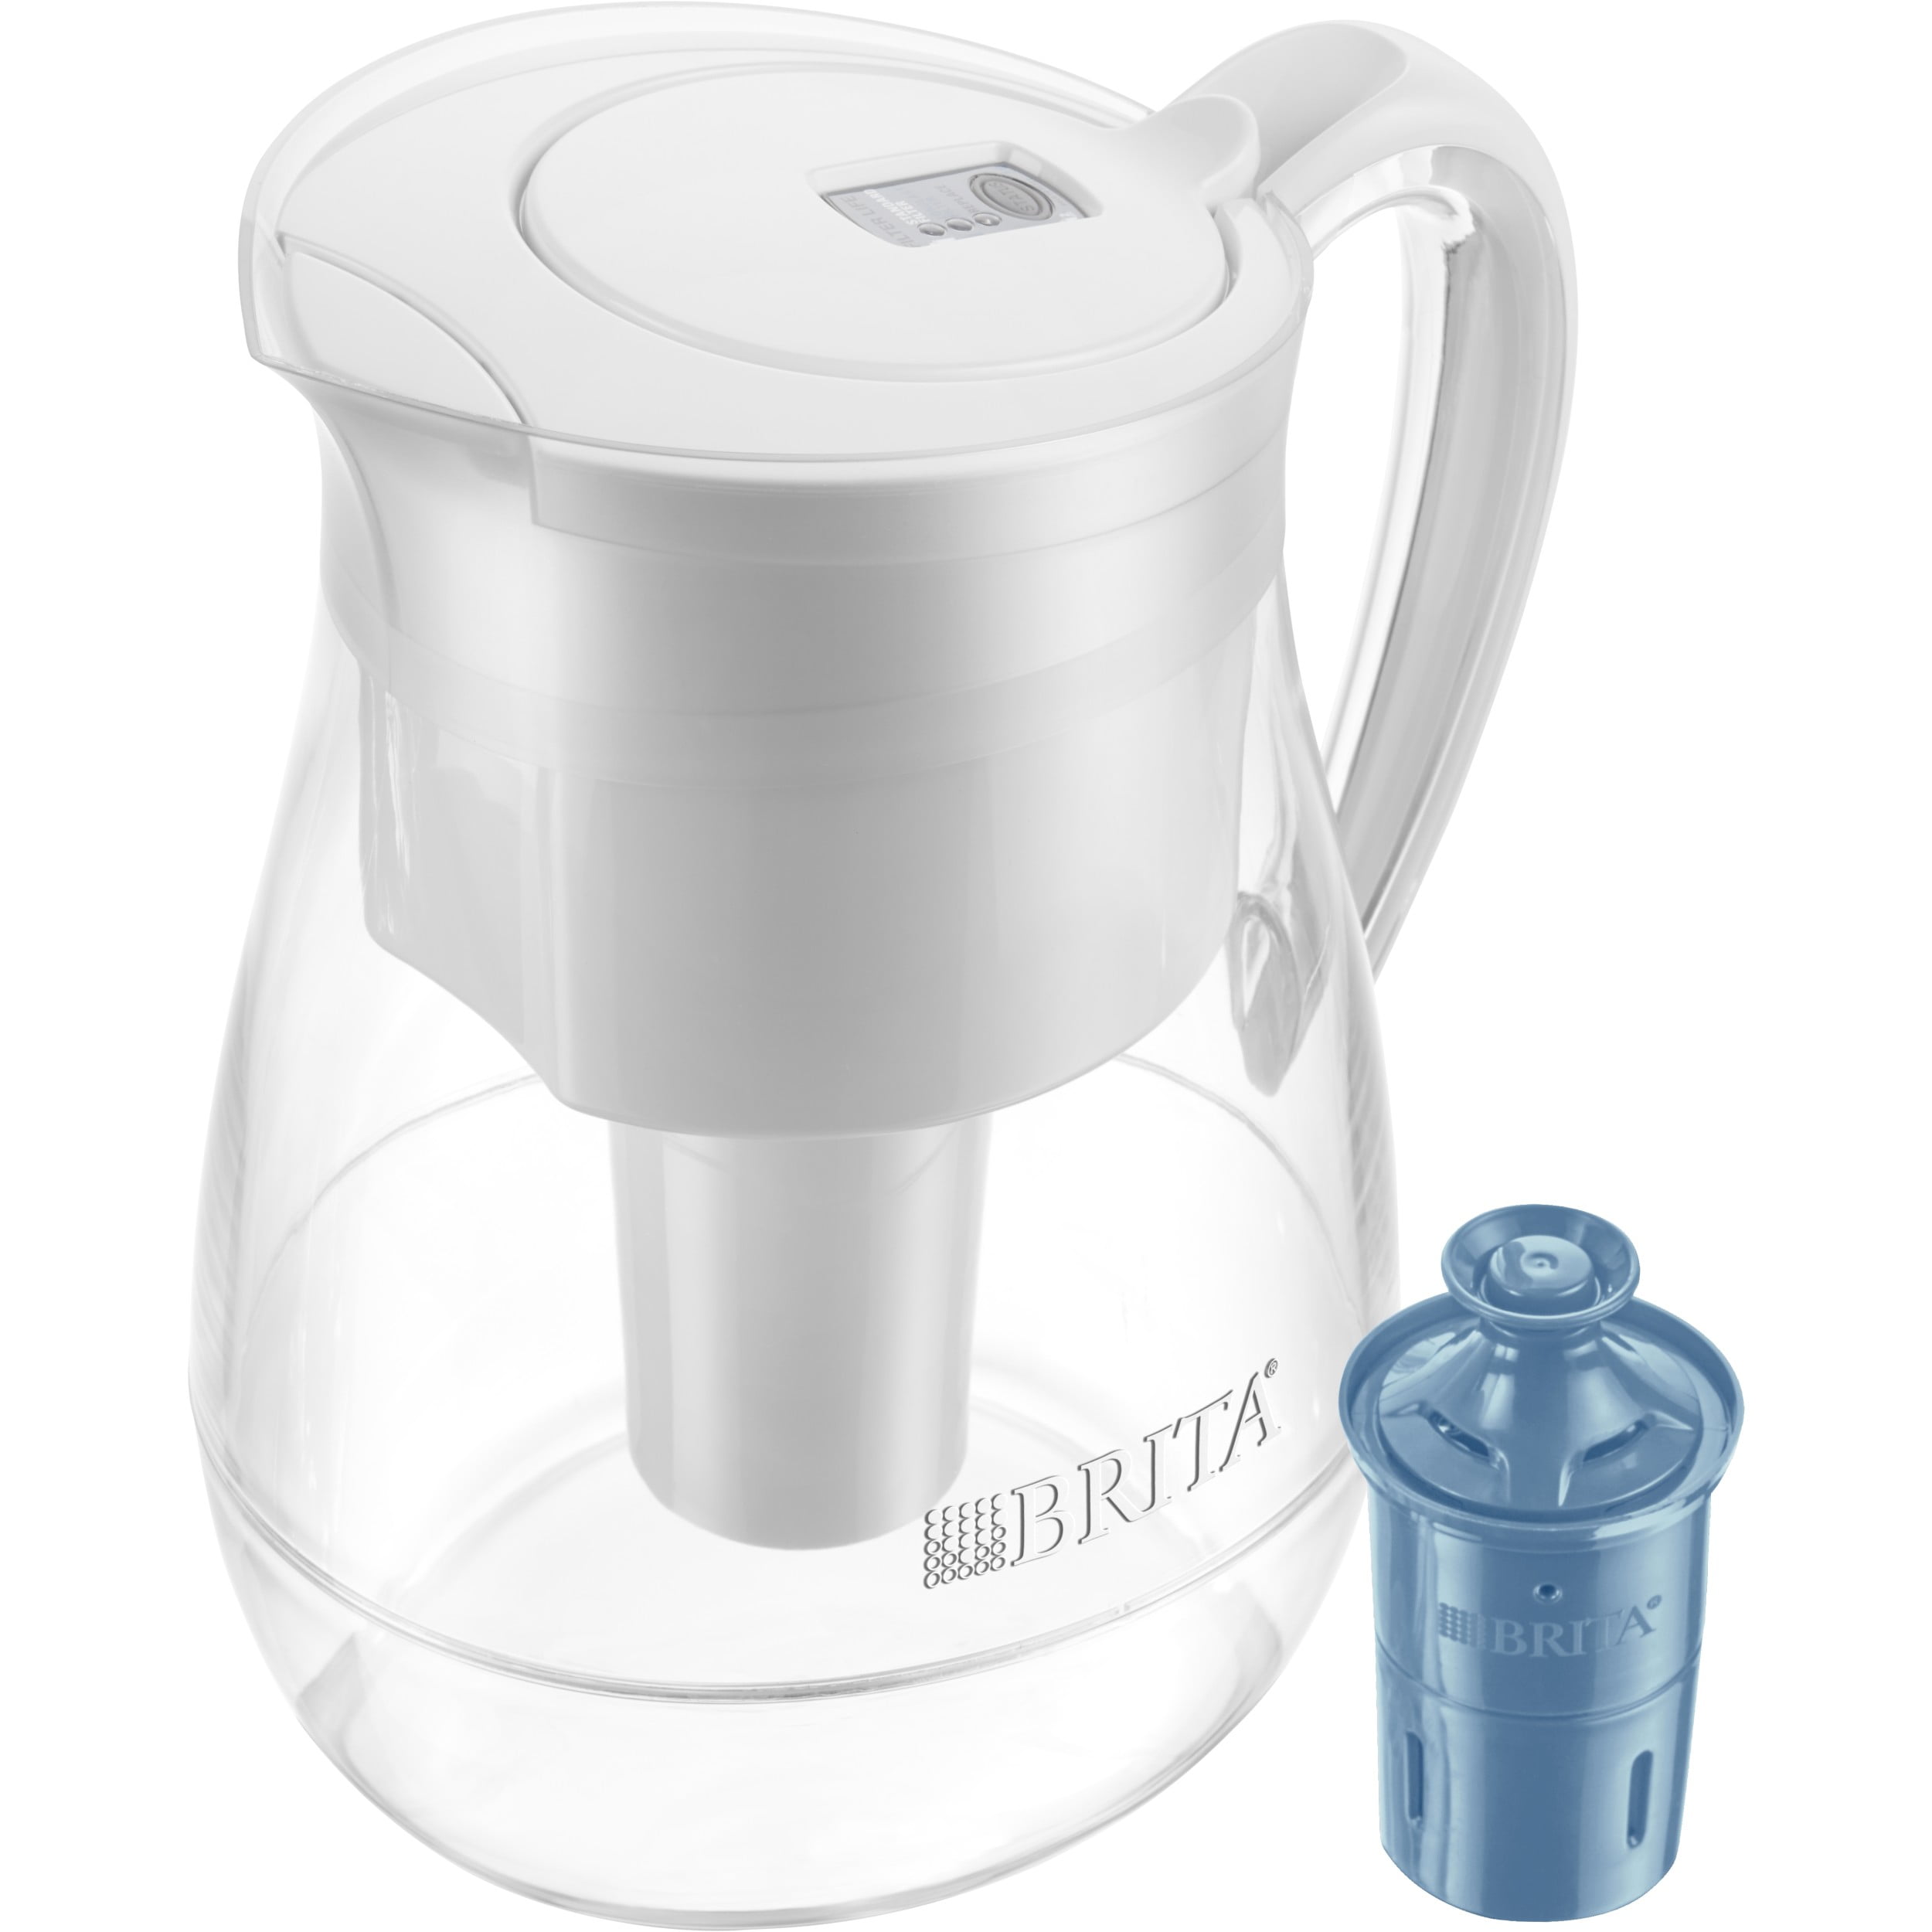 Brita Monterey Longlast Filter Water Filter Pitcher, 10 Cup - White ...